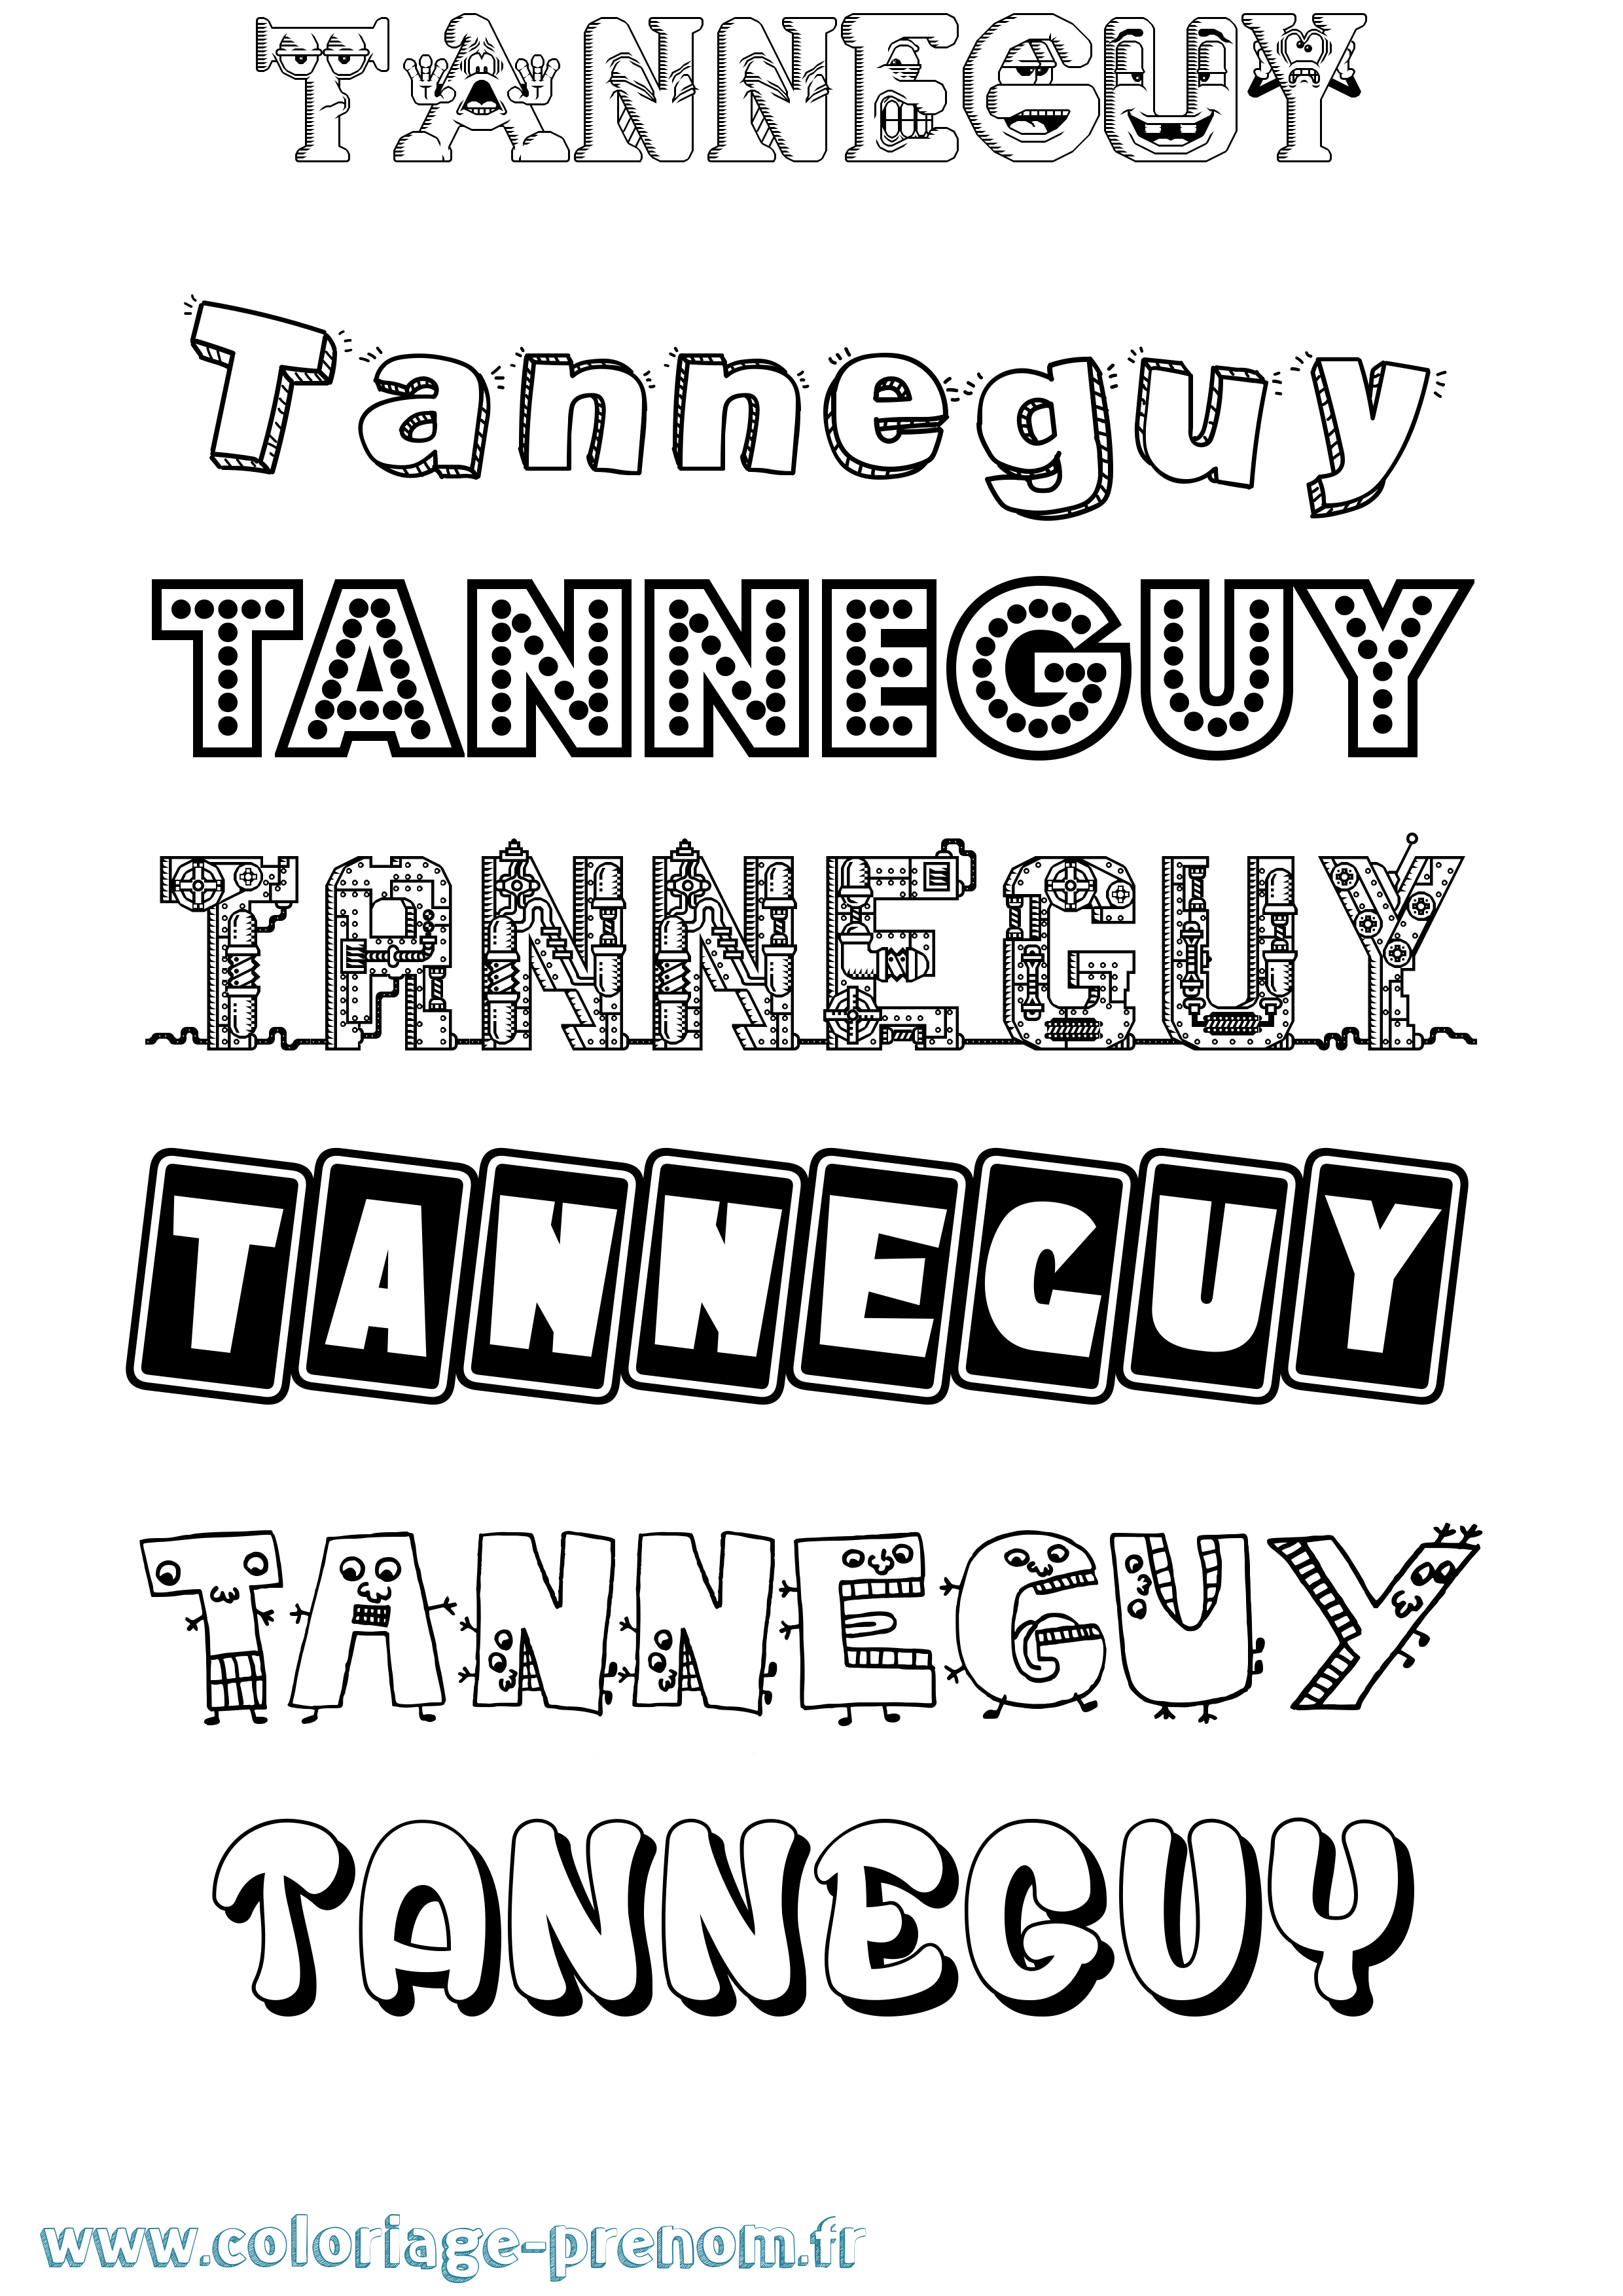 Coloriage prénom Tanneguy Fun